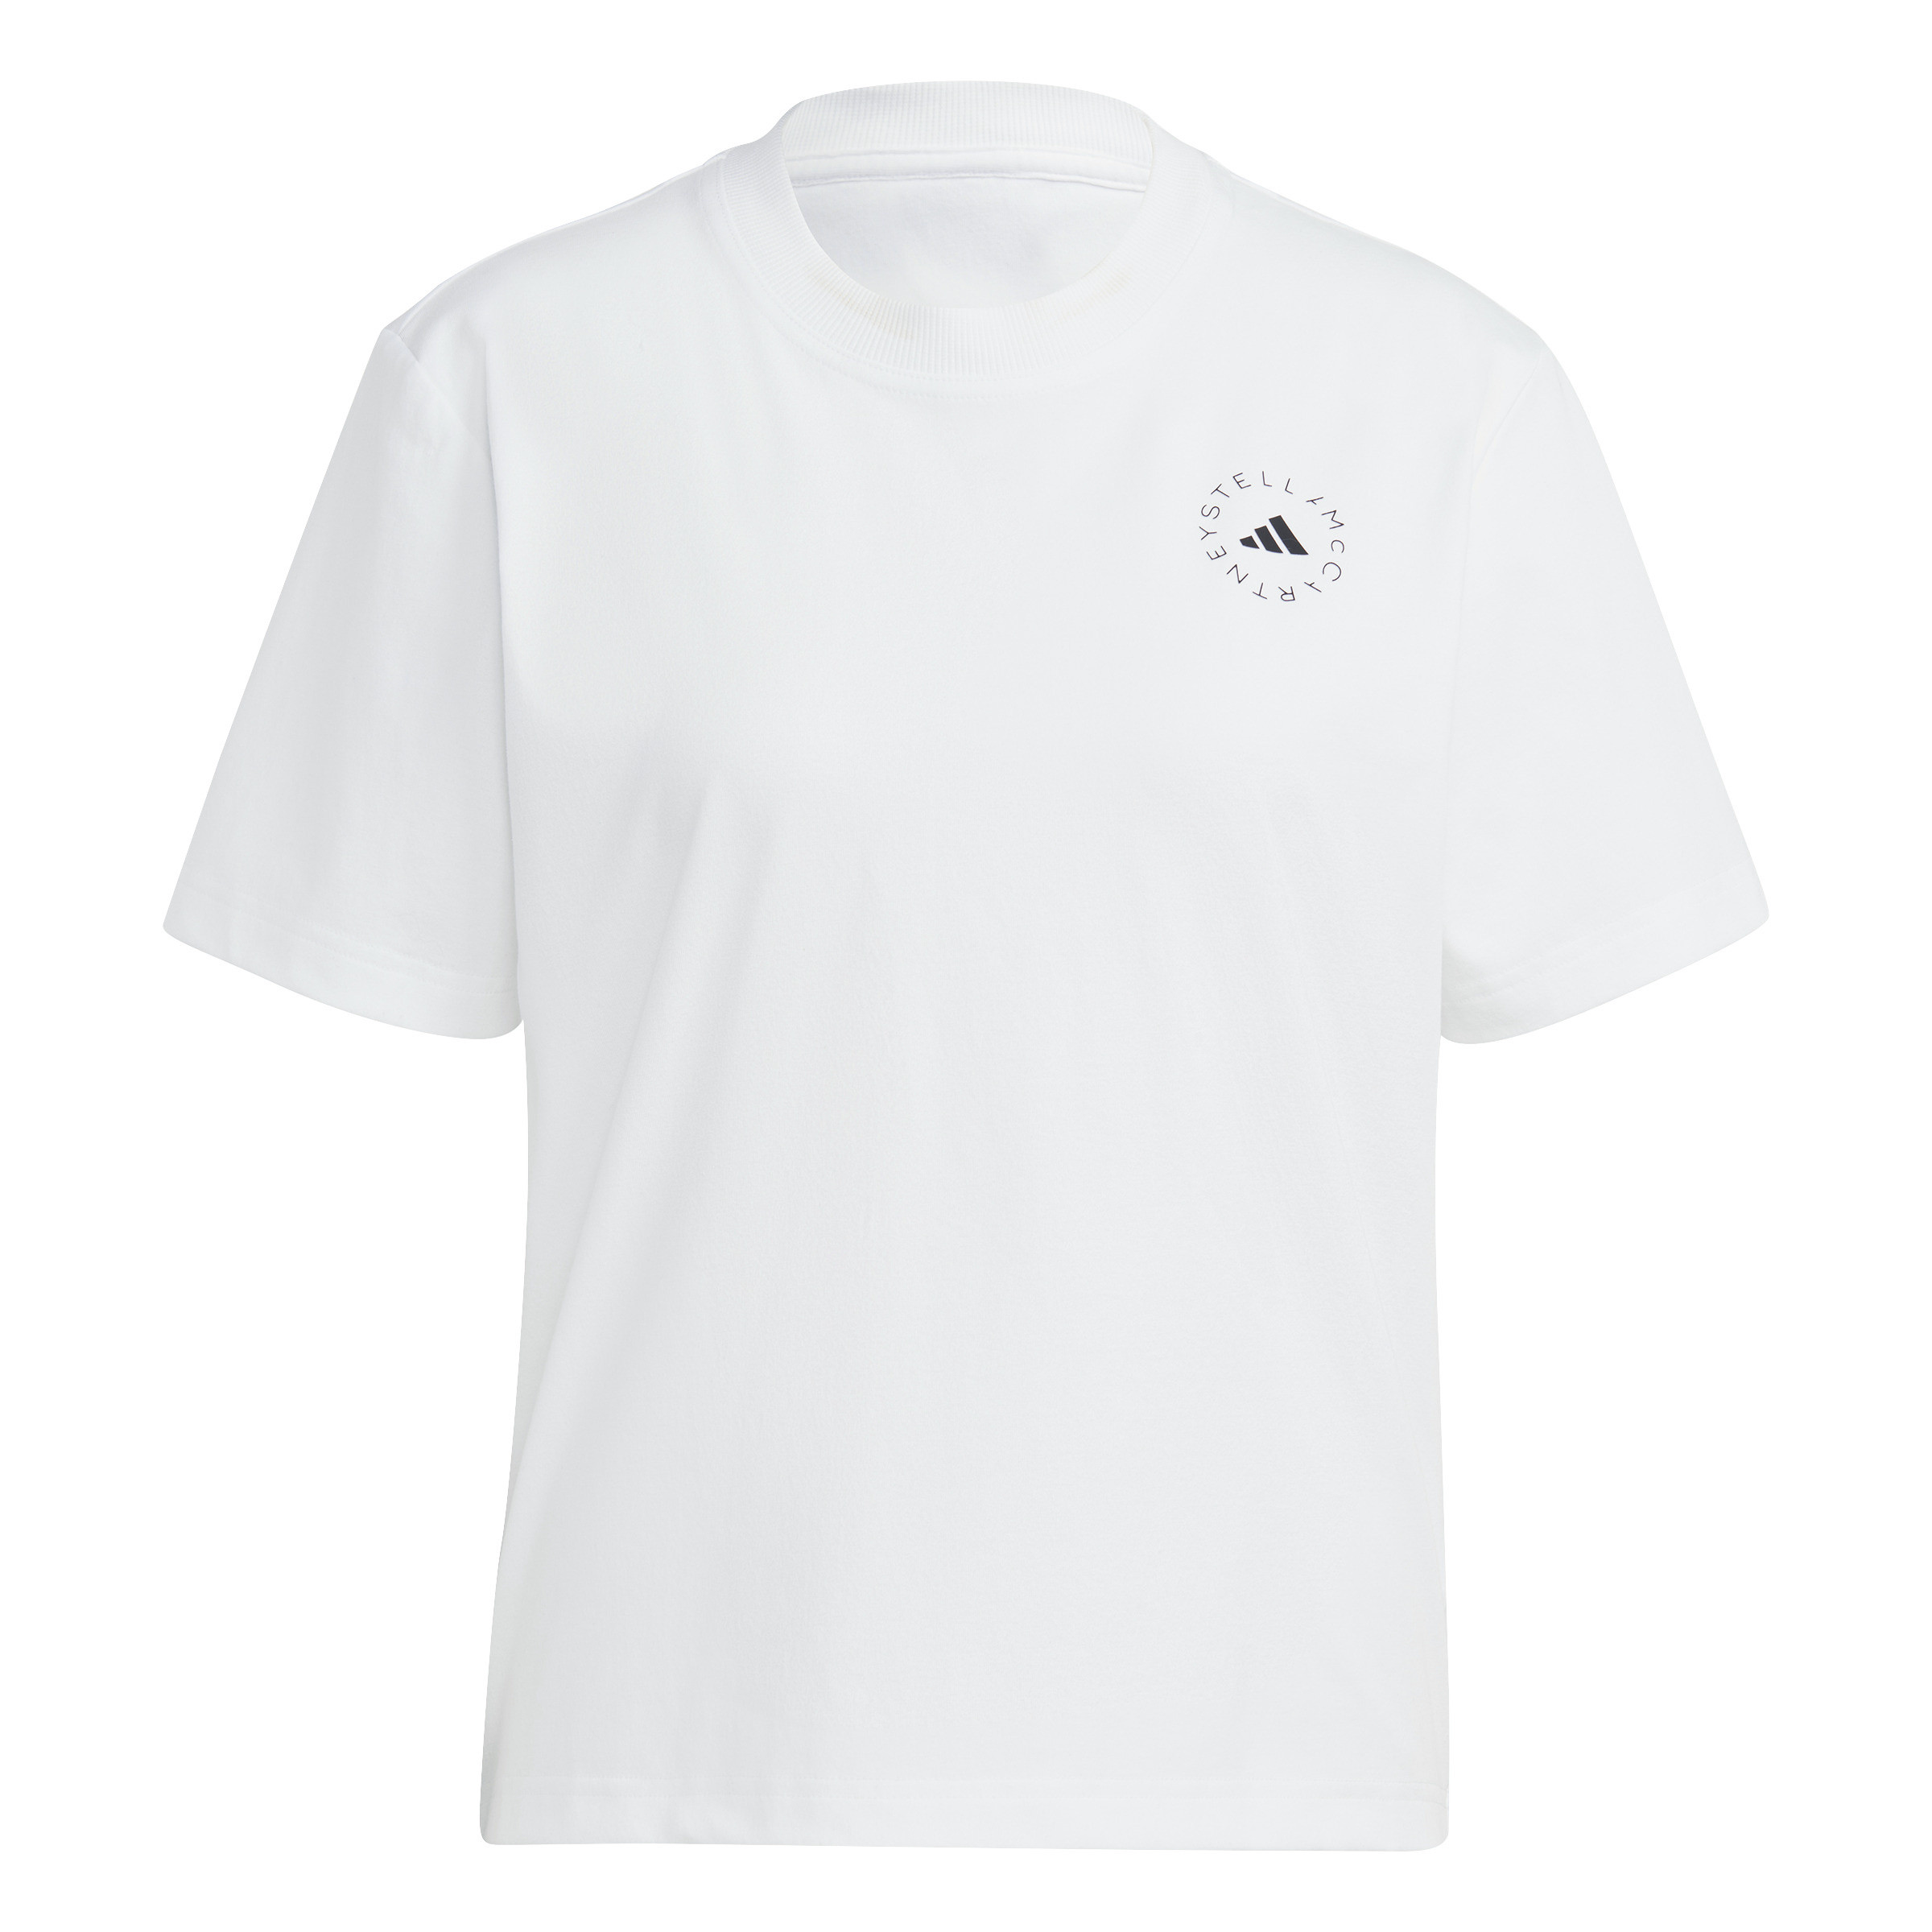 Adidas by Stella McCartney - TrueCasuals Regular Sportswear T-Shirt, White, large image number 0